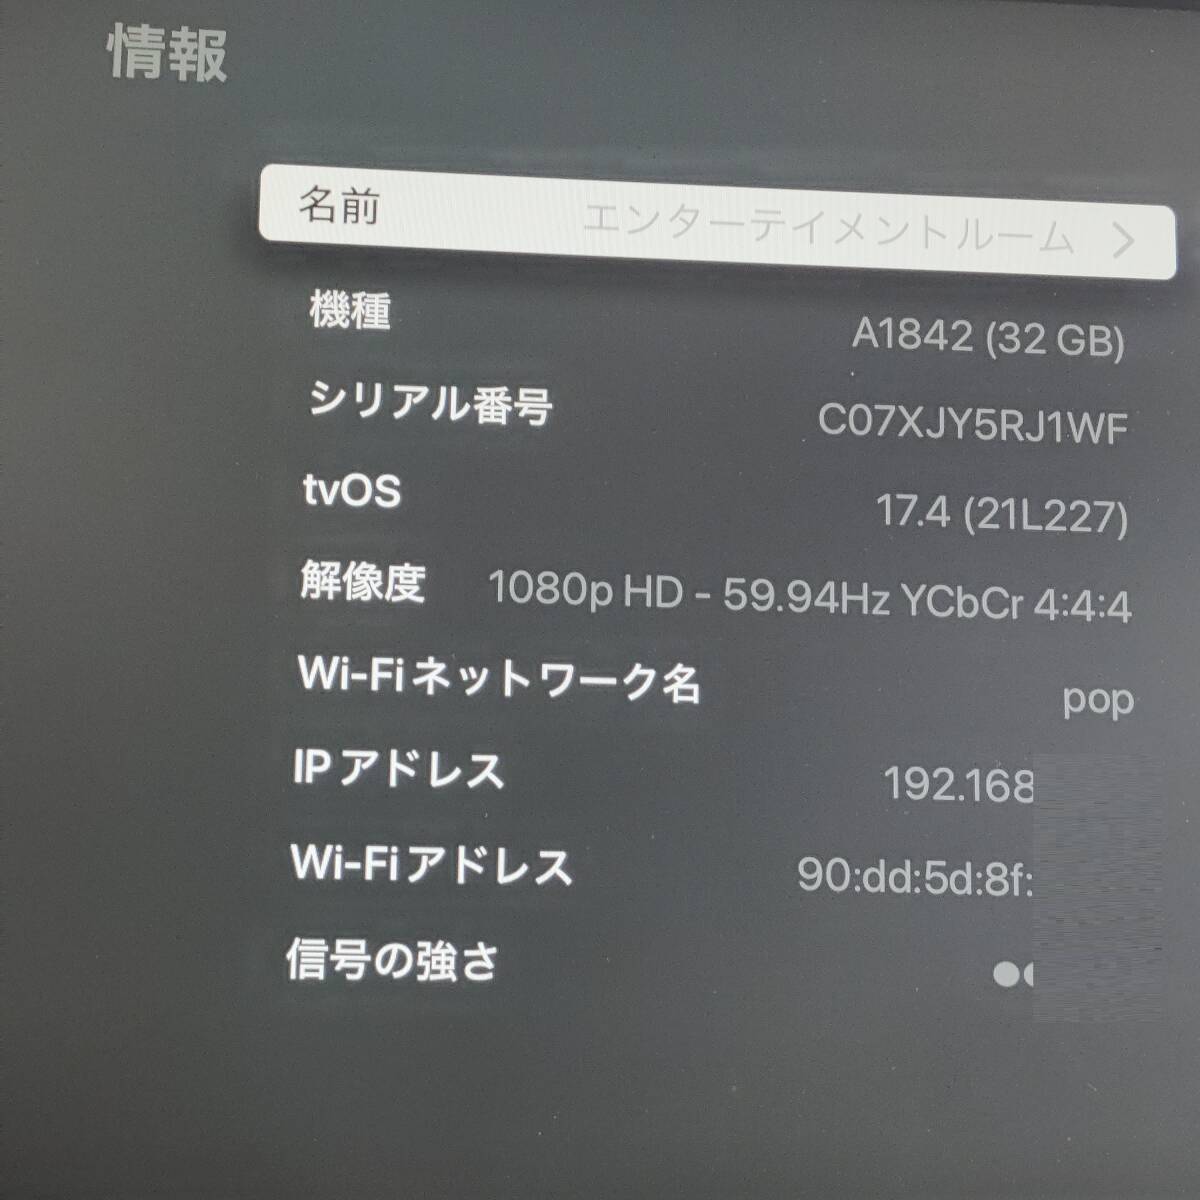 【5RJ1WF】Apple TV 4K 32GB A1842 本体 リモコン 電源ケーブル HDMIケーブル _画像7